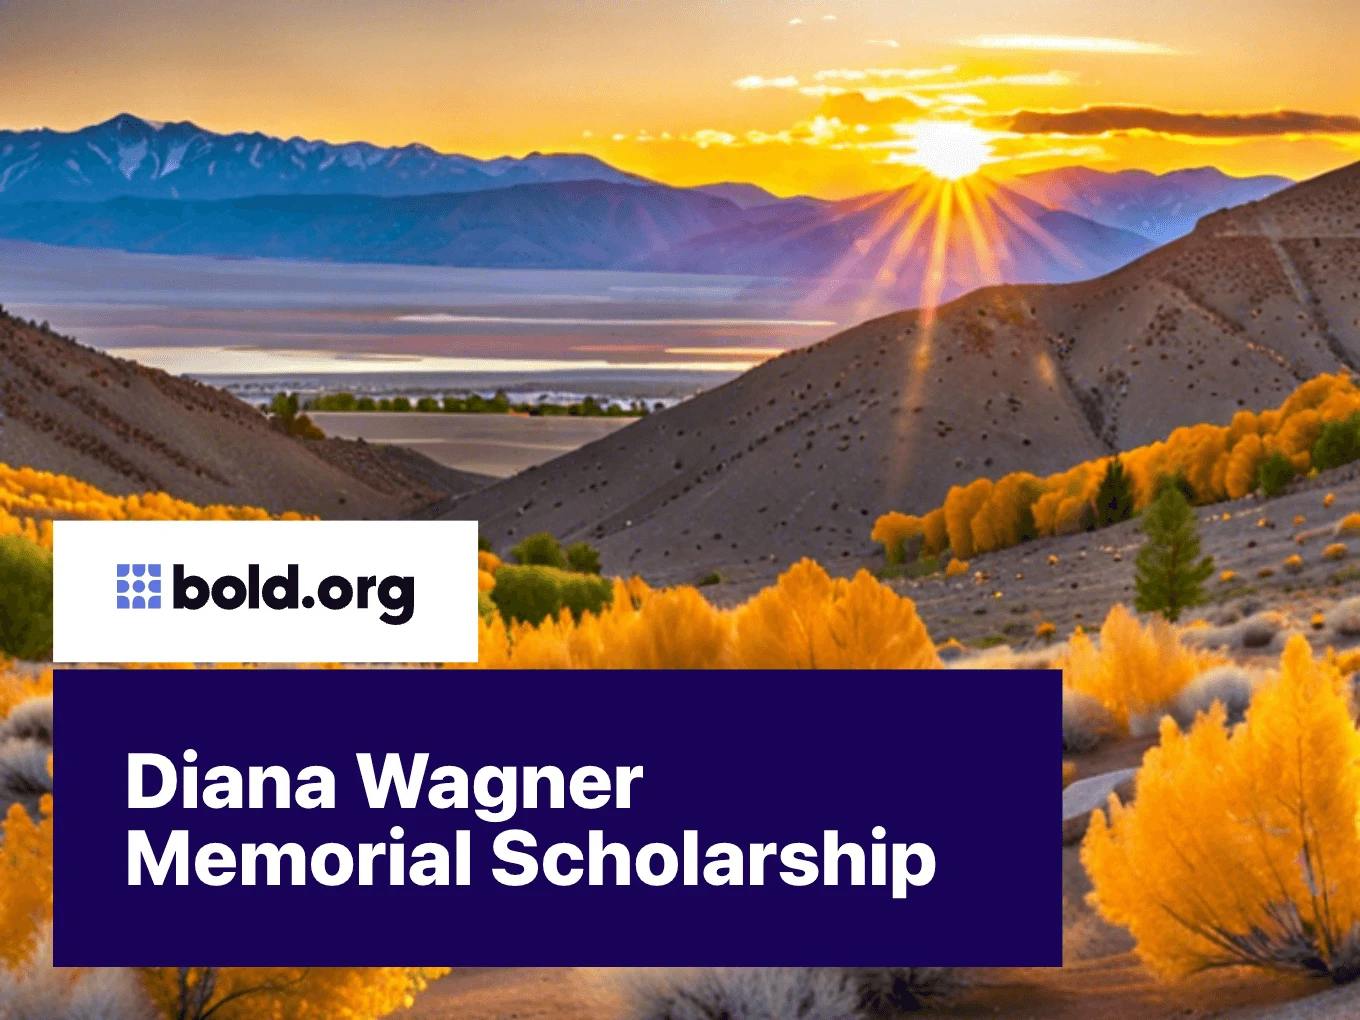 Diana Wagner Memorial Scholarship